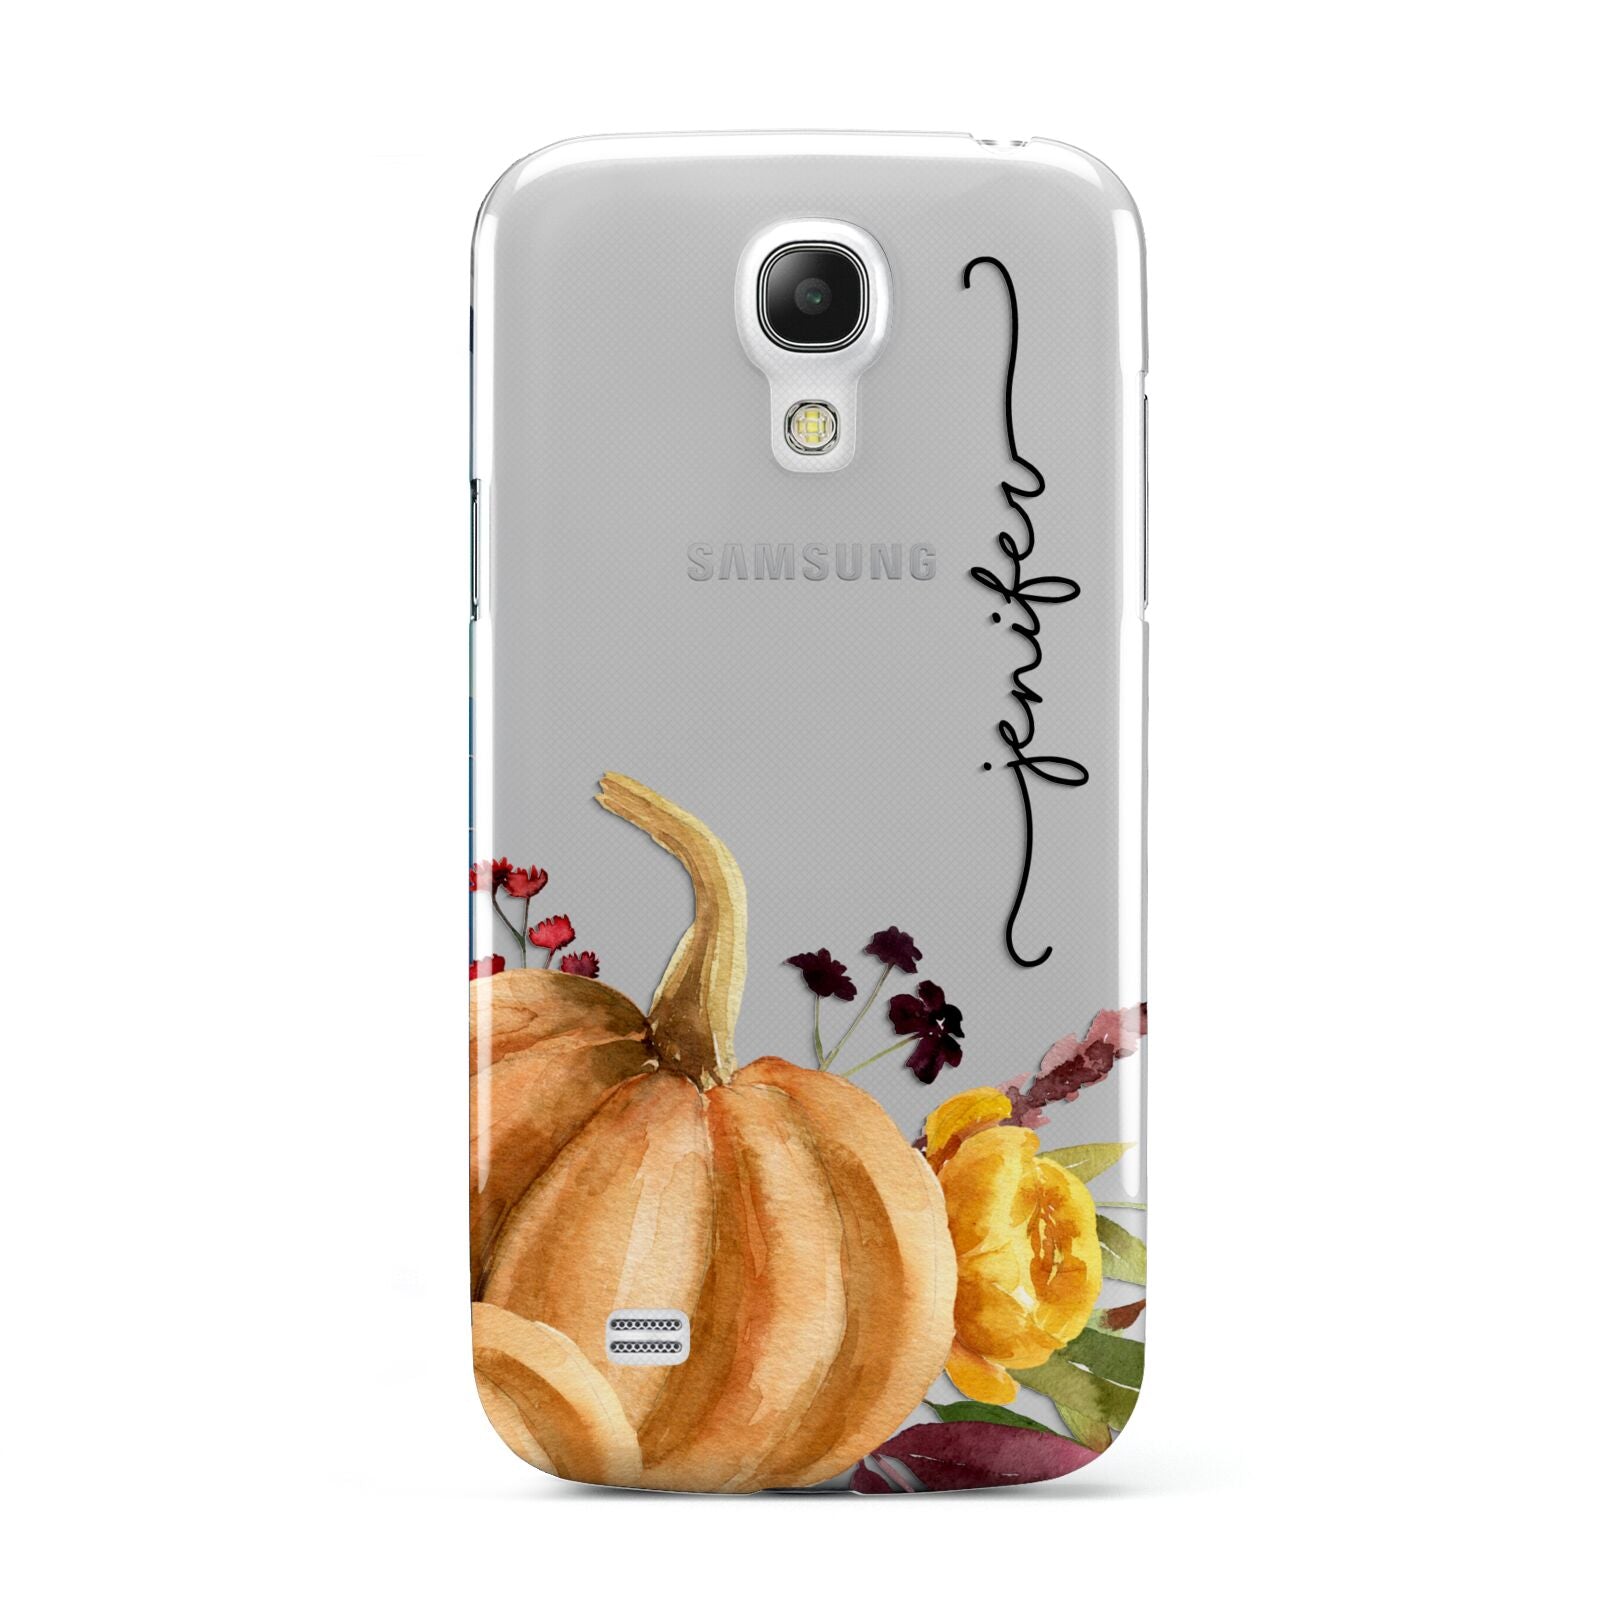 Watercolour Pumpkins with Black Vertical Text Samsung Galaxy S4 Mini Case